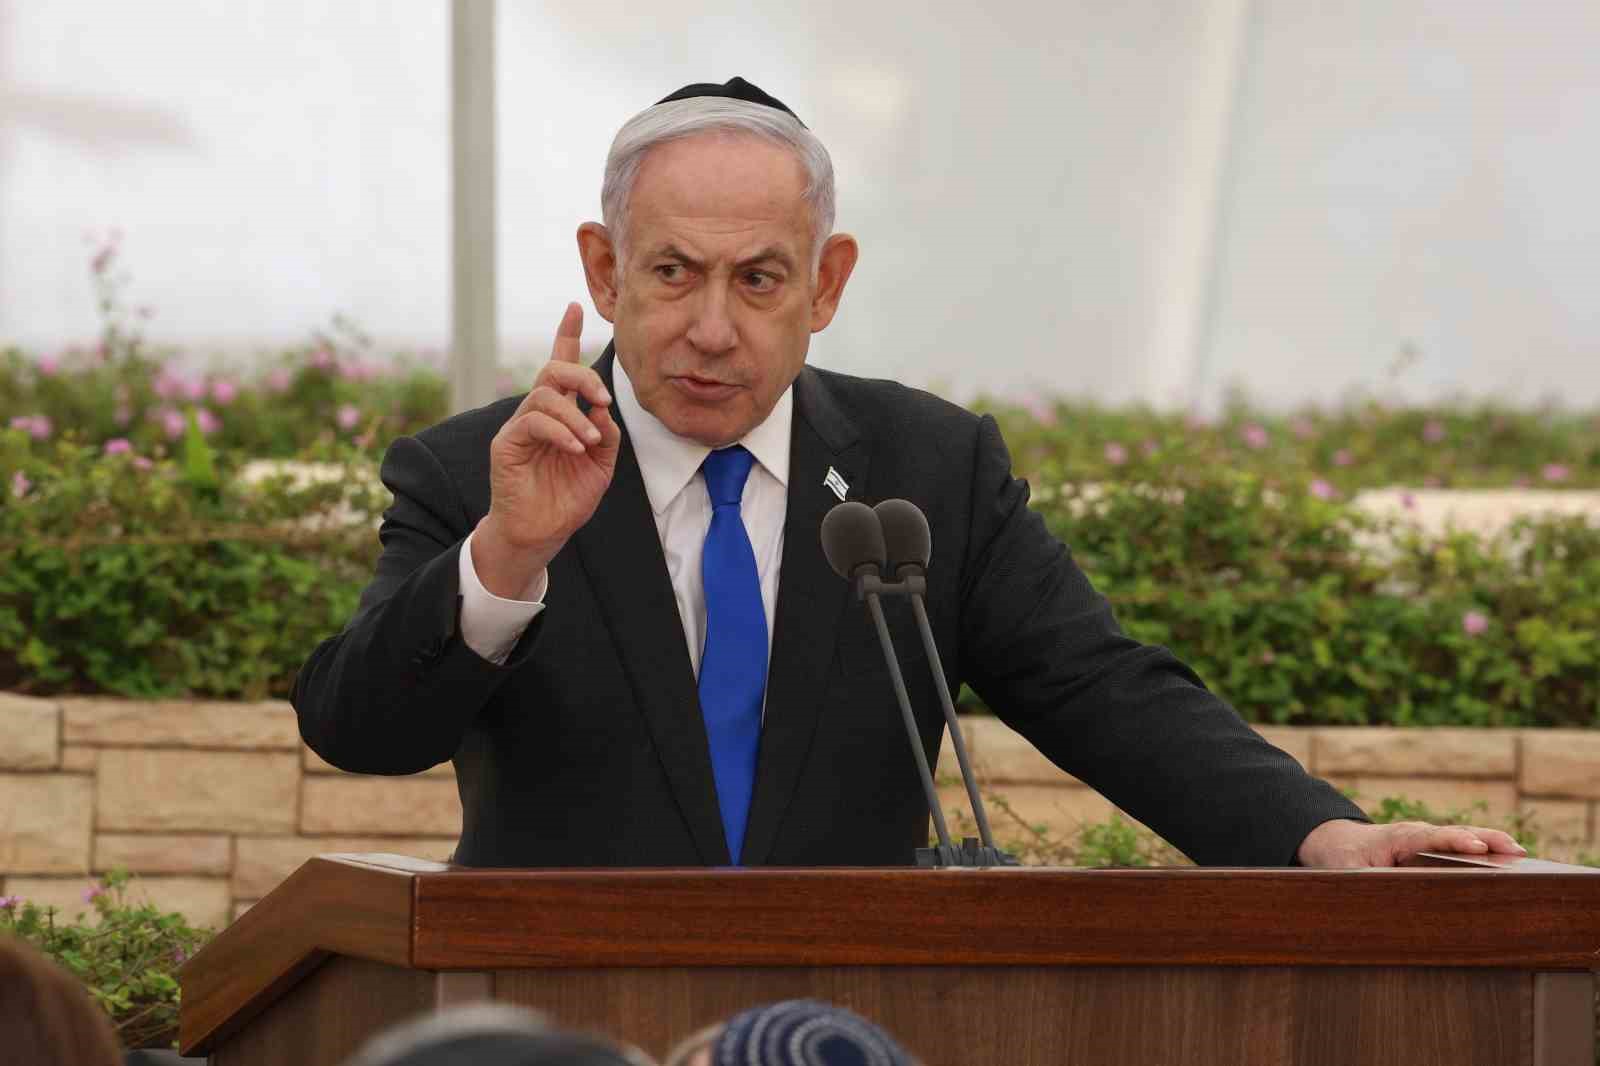 Netanyahu: “Gazze’deki yoğun savaş bitmek üzere”